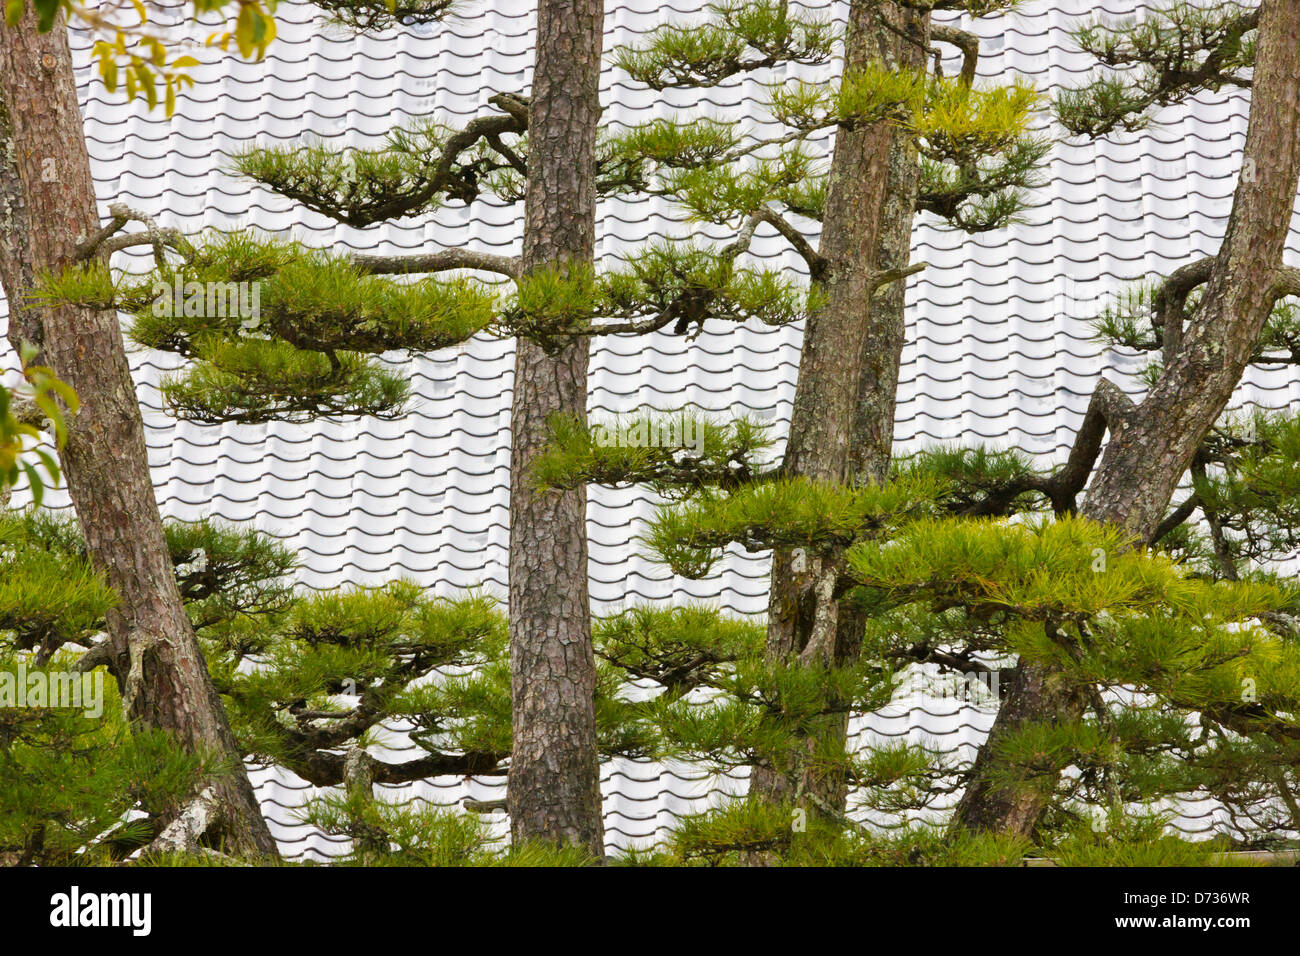 Pine tree with tiled roof, Miyajima, Japan Stock Photo